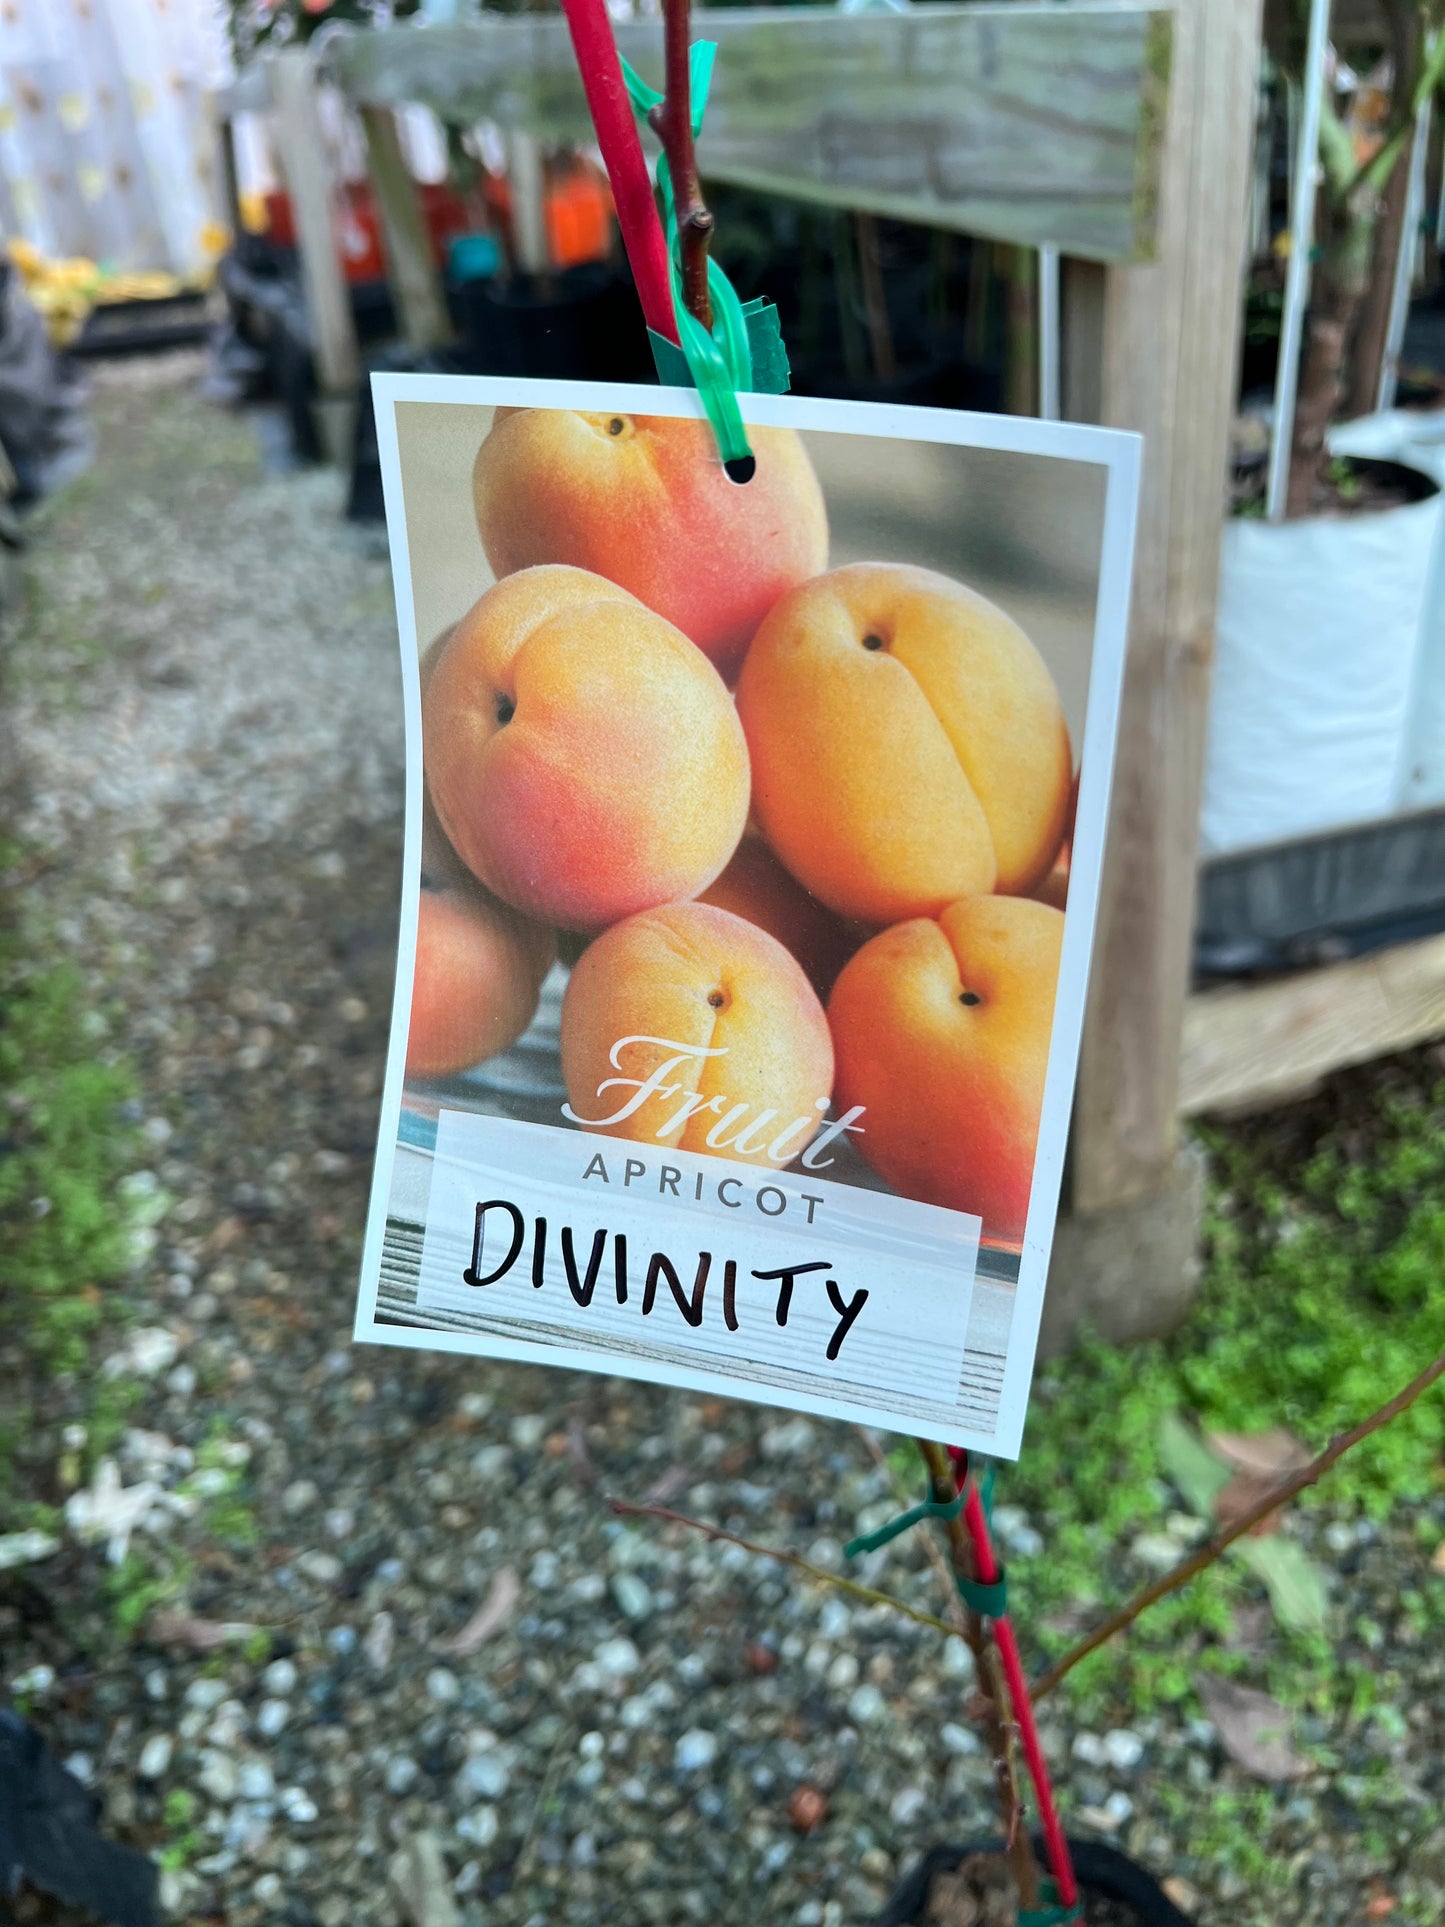 Apricot - Divinity